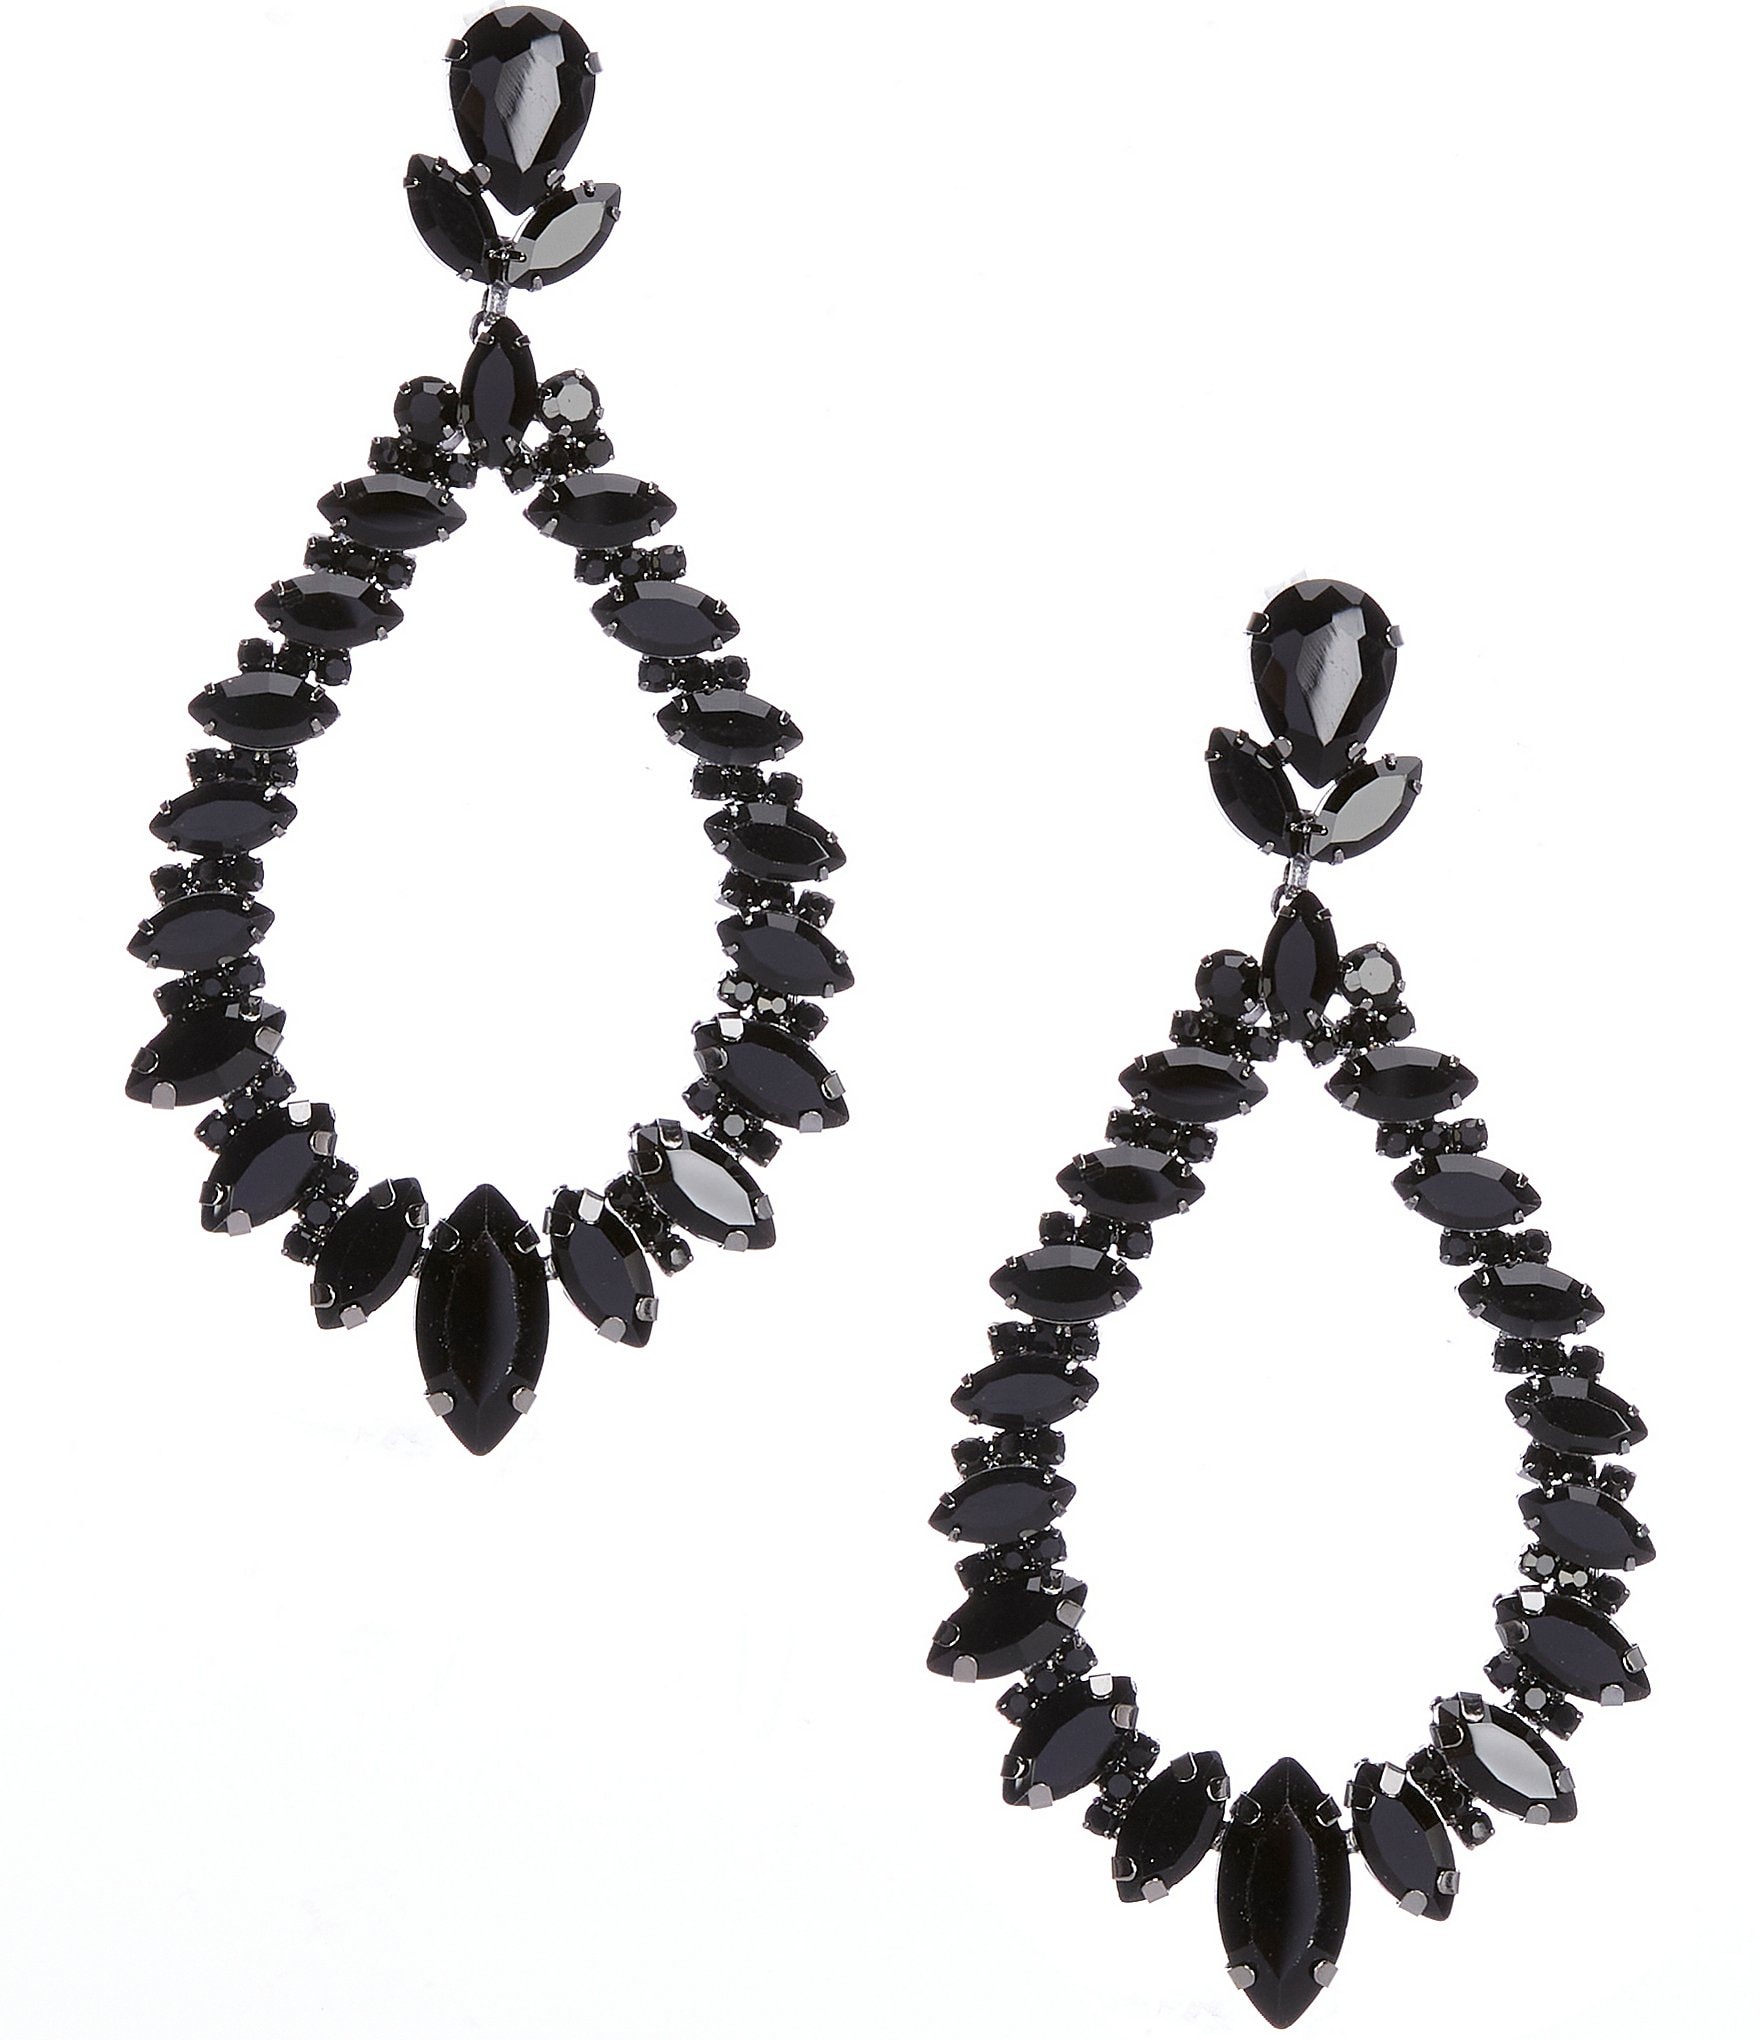 Buy Black Drop Earrings for Luxurious Weddings, Formals, Events Look |  Black drop earrings, Black earrings, Black jewelry